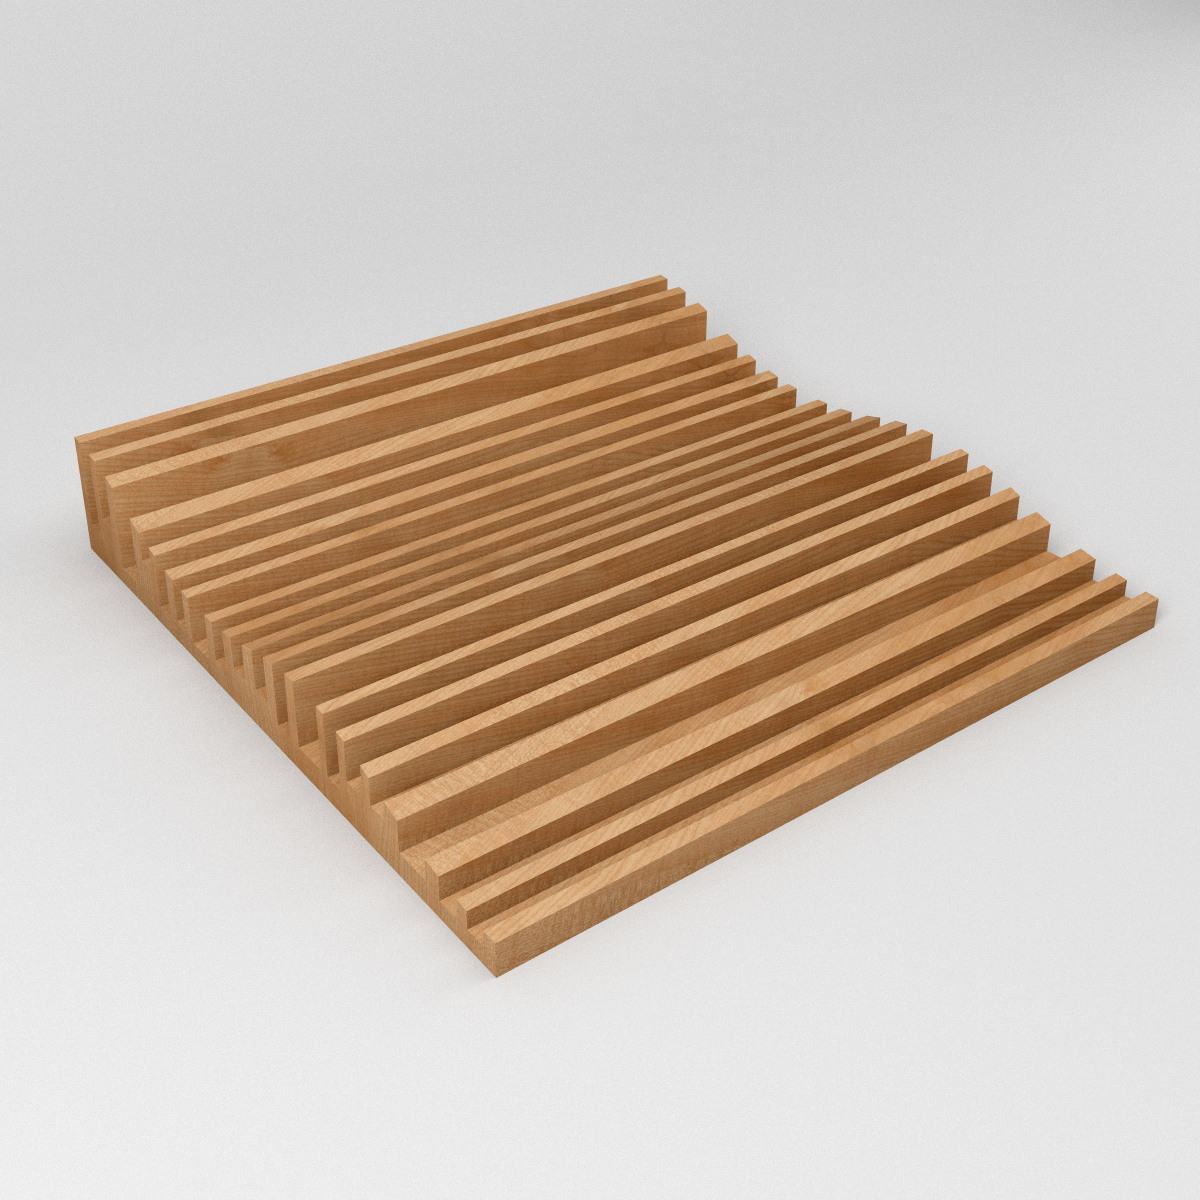 Wooden acoustic wall panel 3D model - TurboSquid 1324572